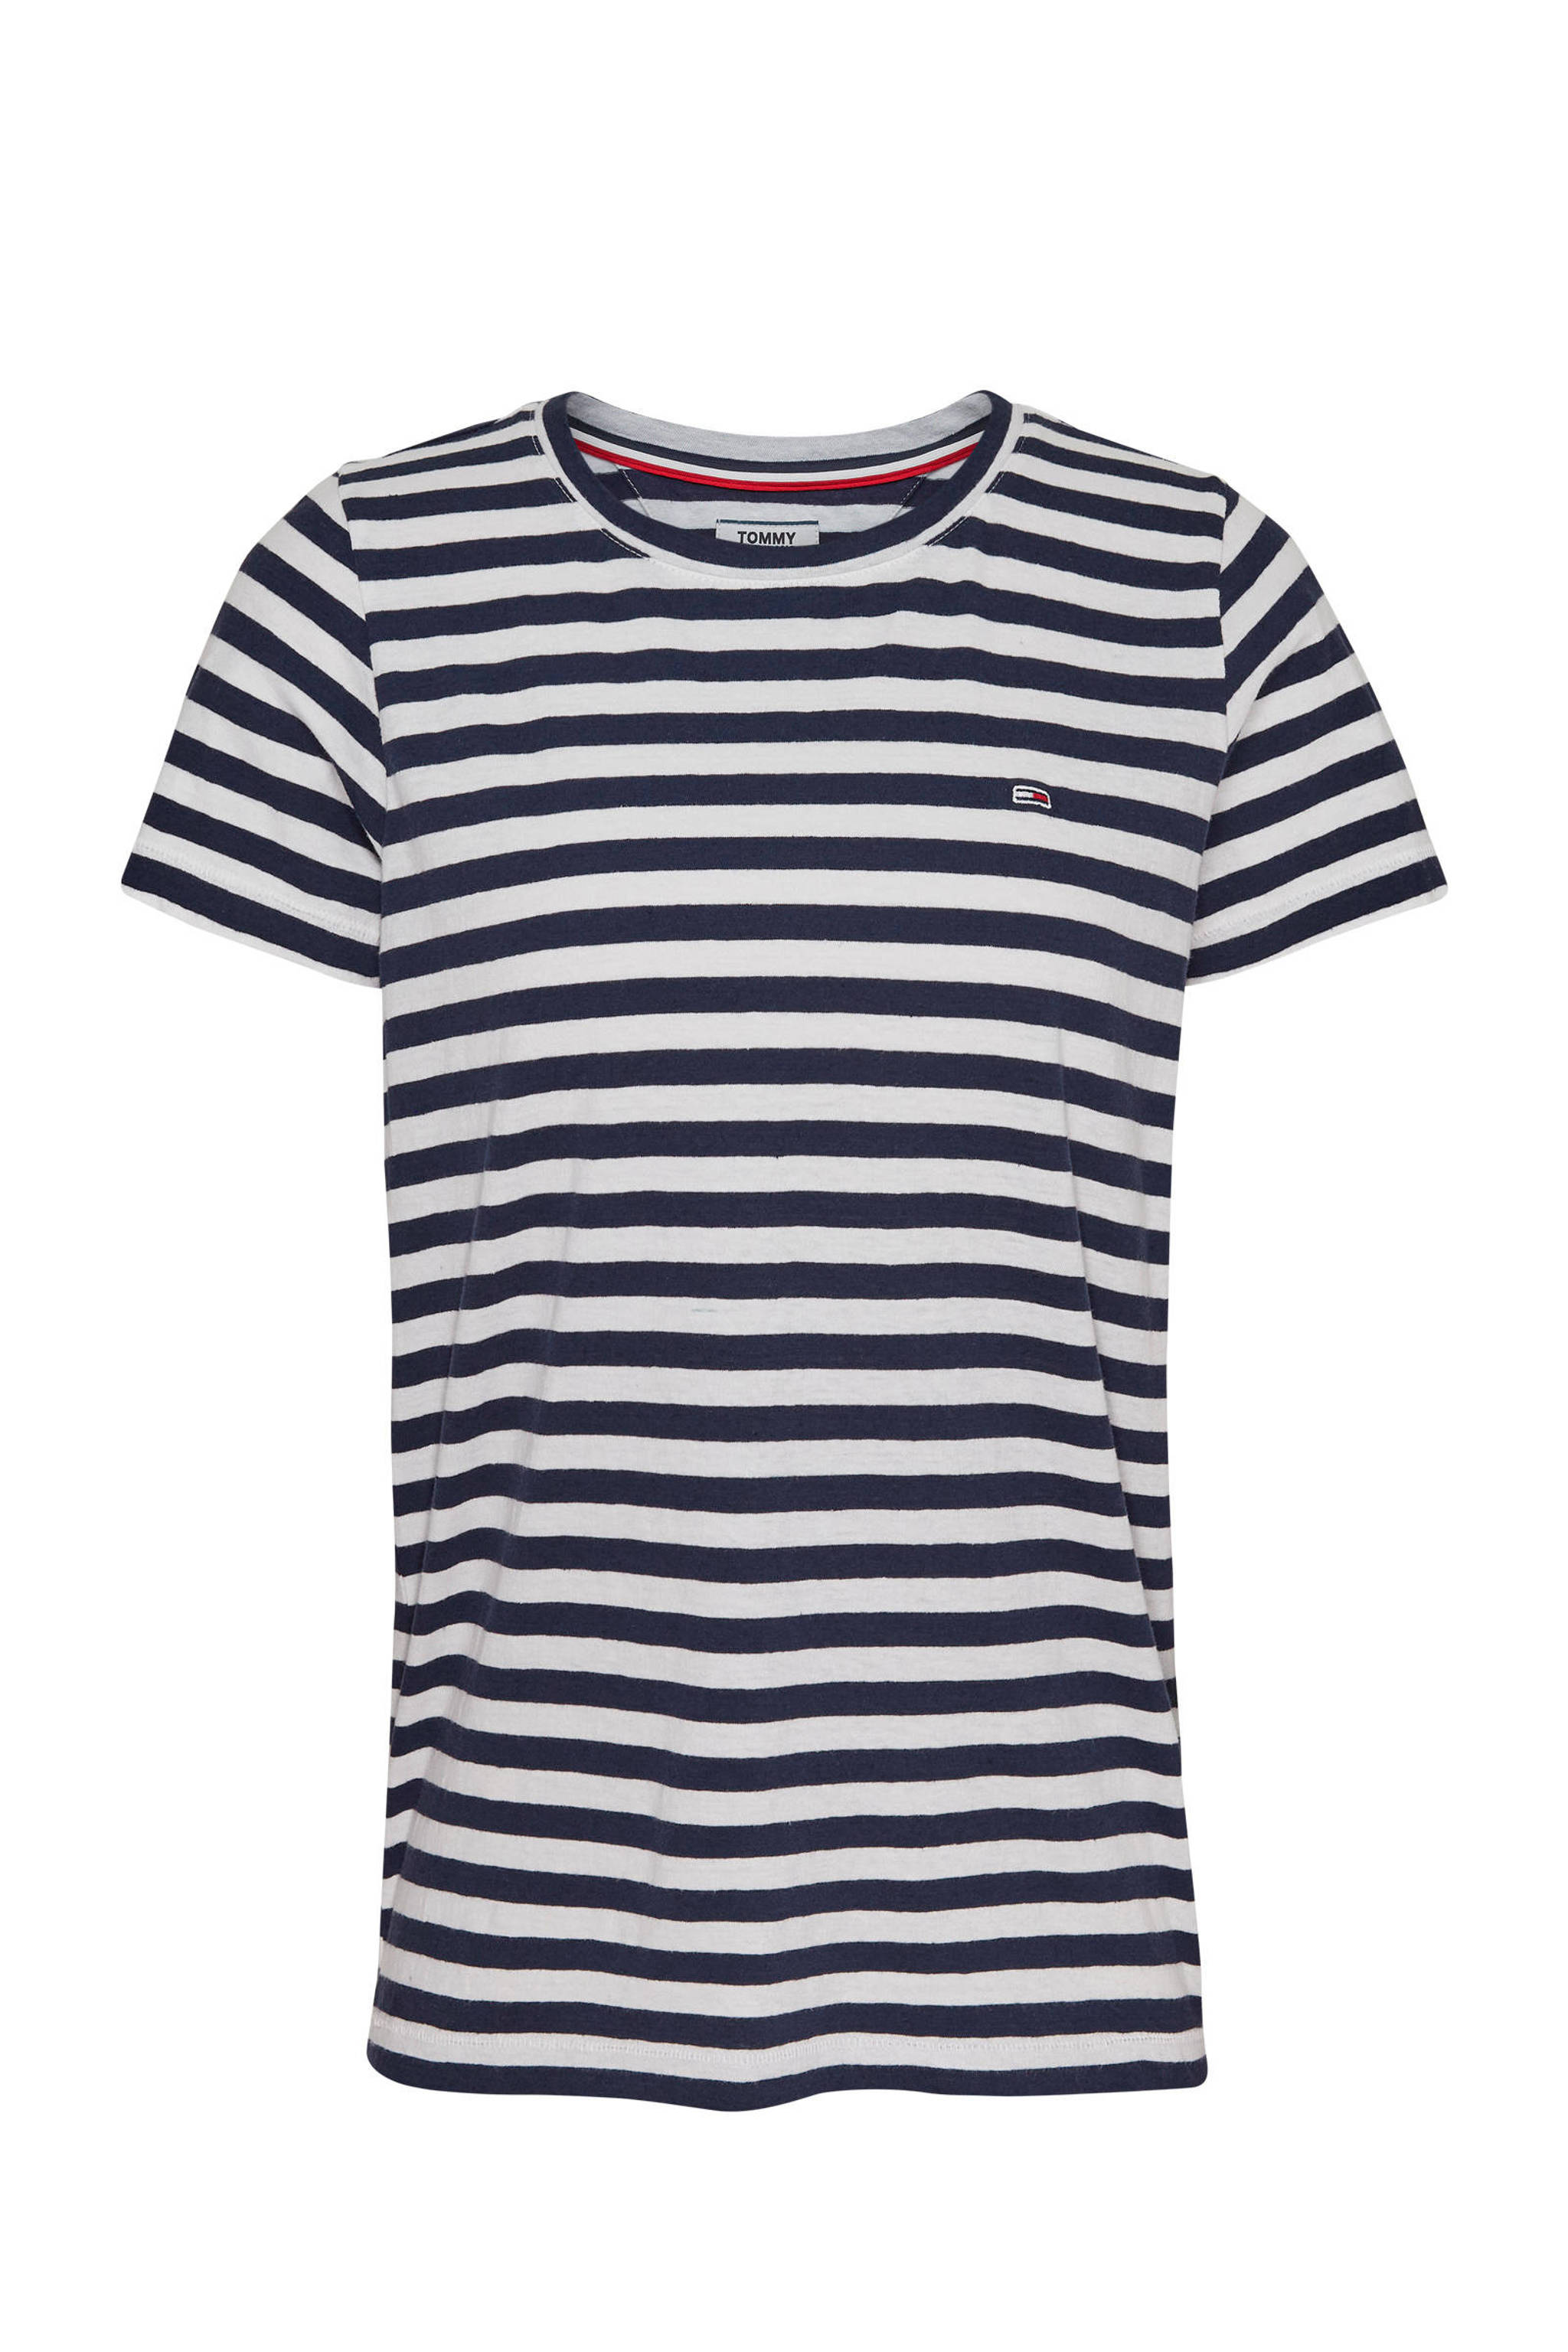 Onwijs Tommy Jeans gestreept T-shirt blauw/wit | wehkamp VR-34